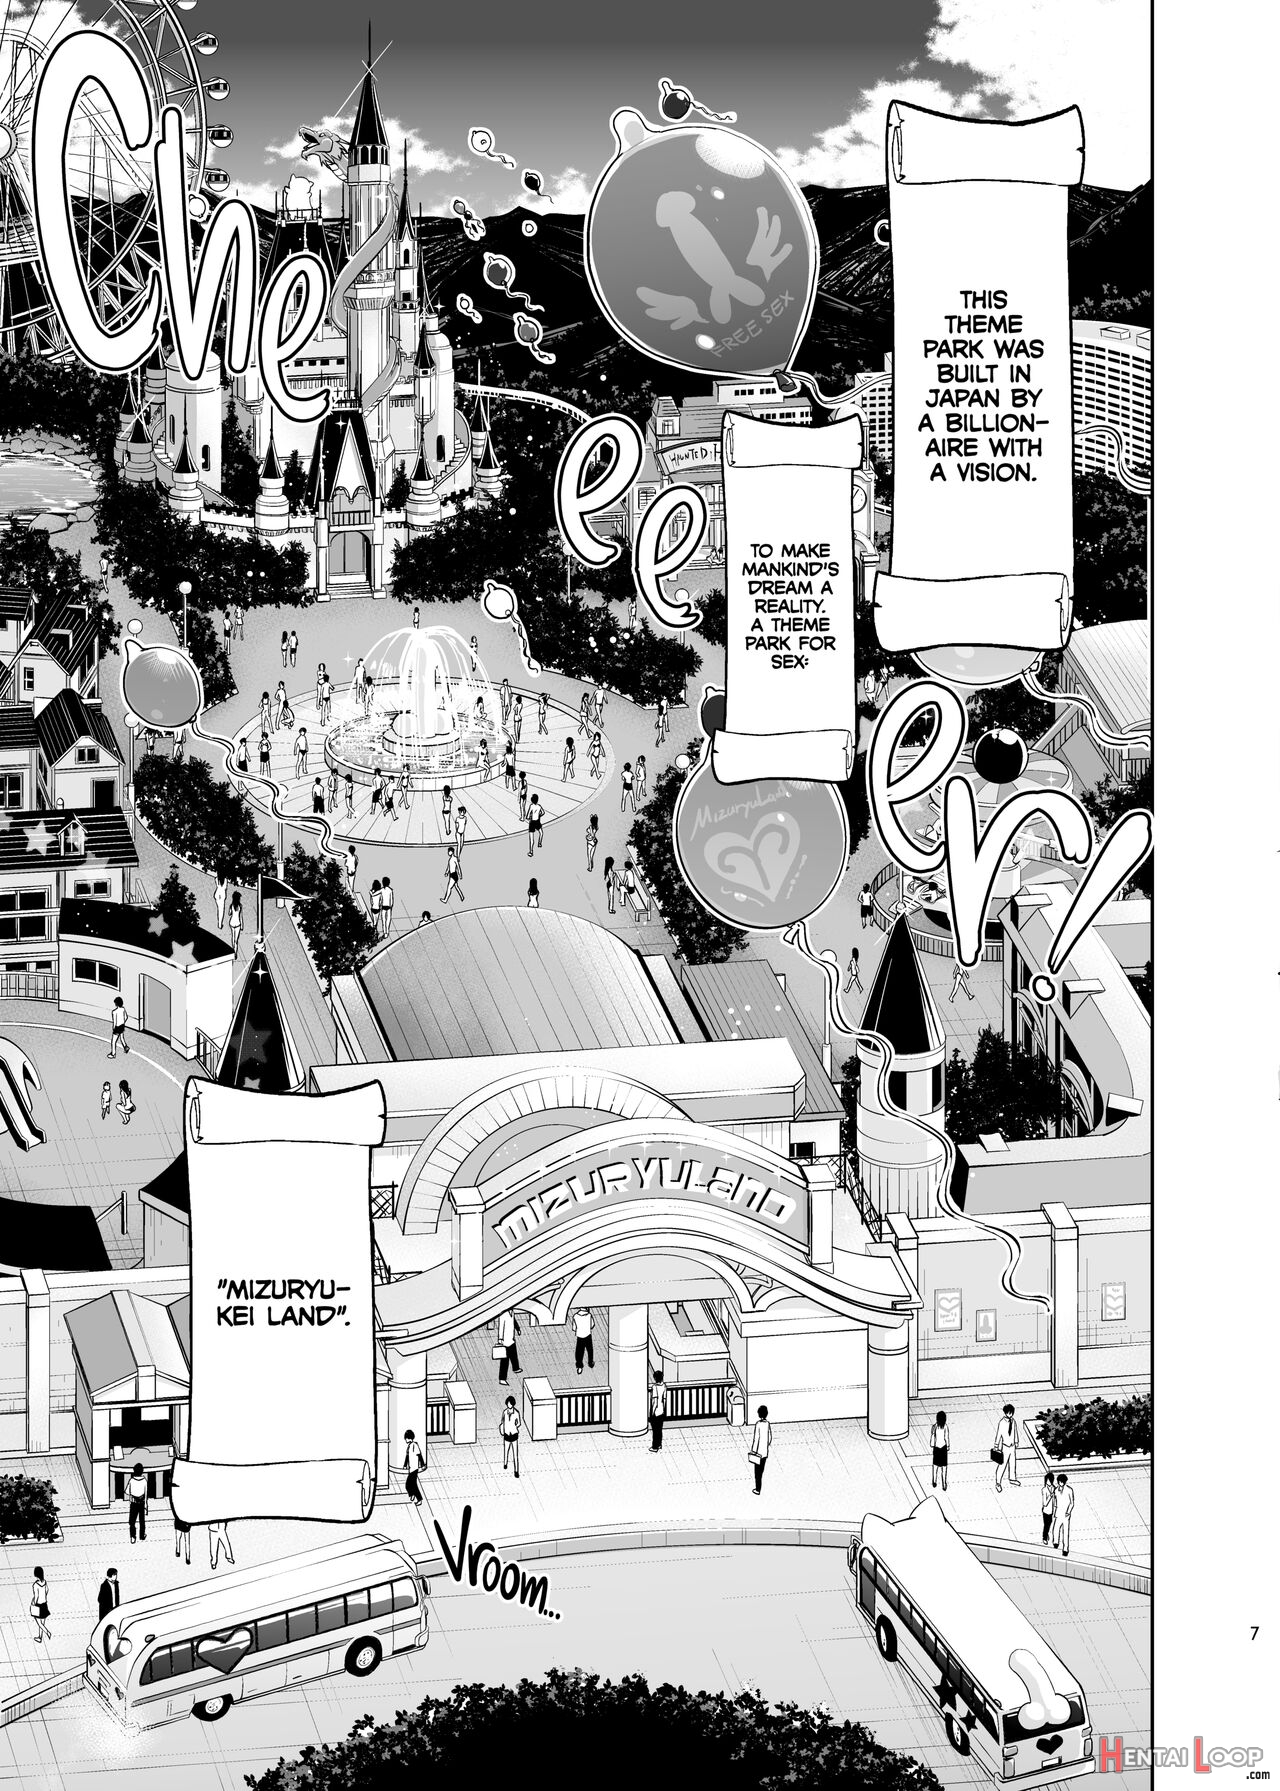 Welcome To Mizuryukei Land - The 1st Day page 7